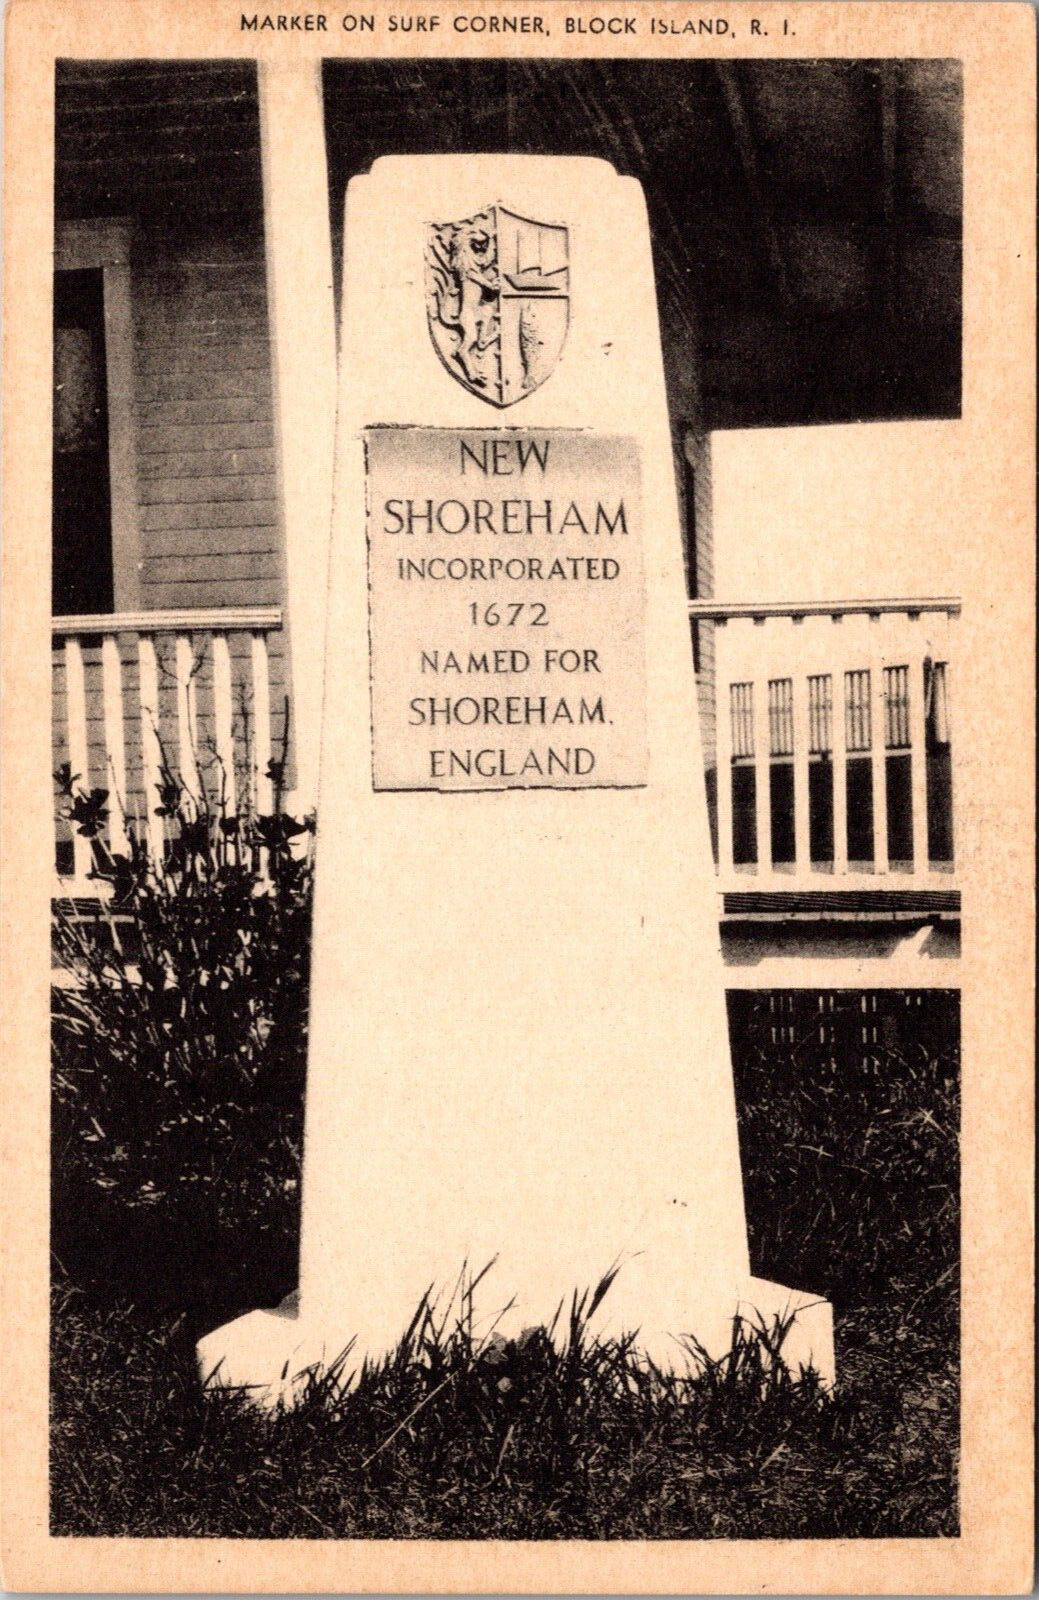 New Shoreham Rhode Island Marker Monument Rock Island Postcard 6H